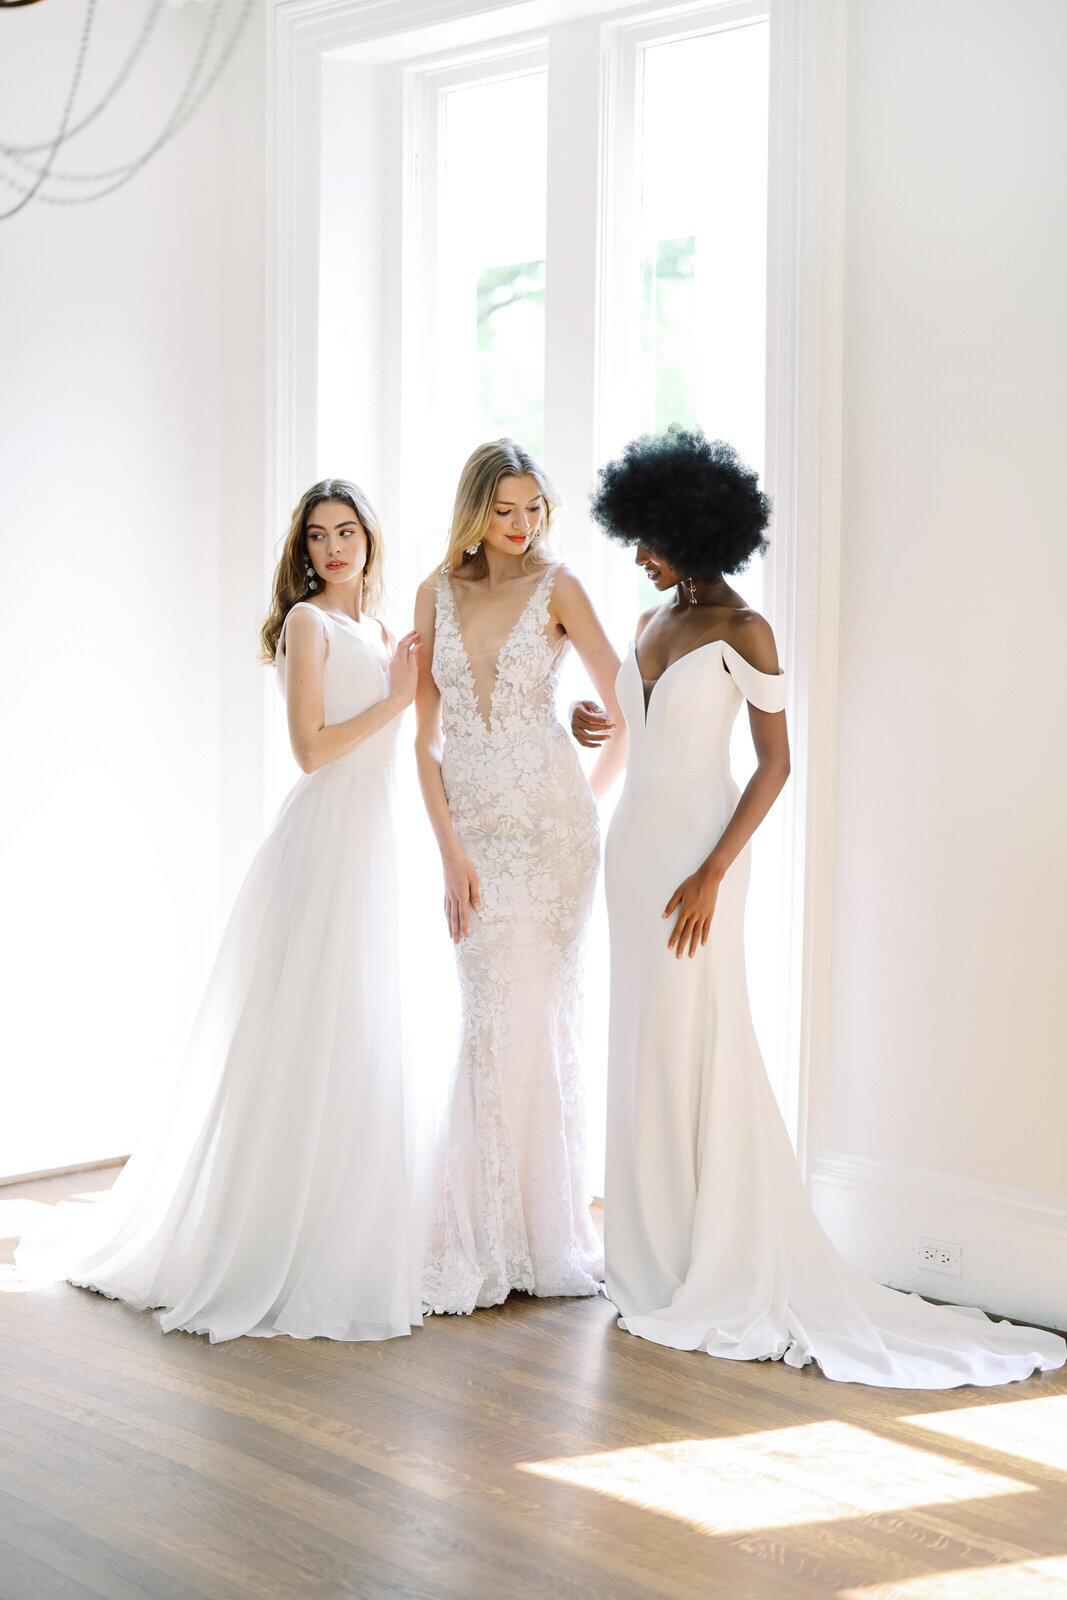 Bridal Fashion Photography in Charlotte North Carolina35